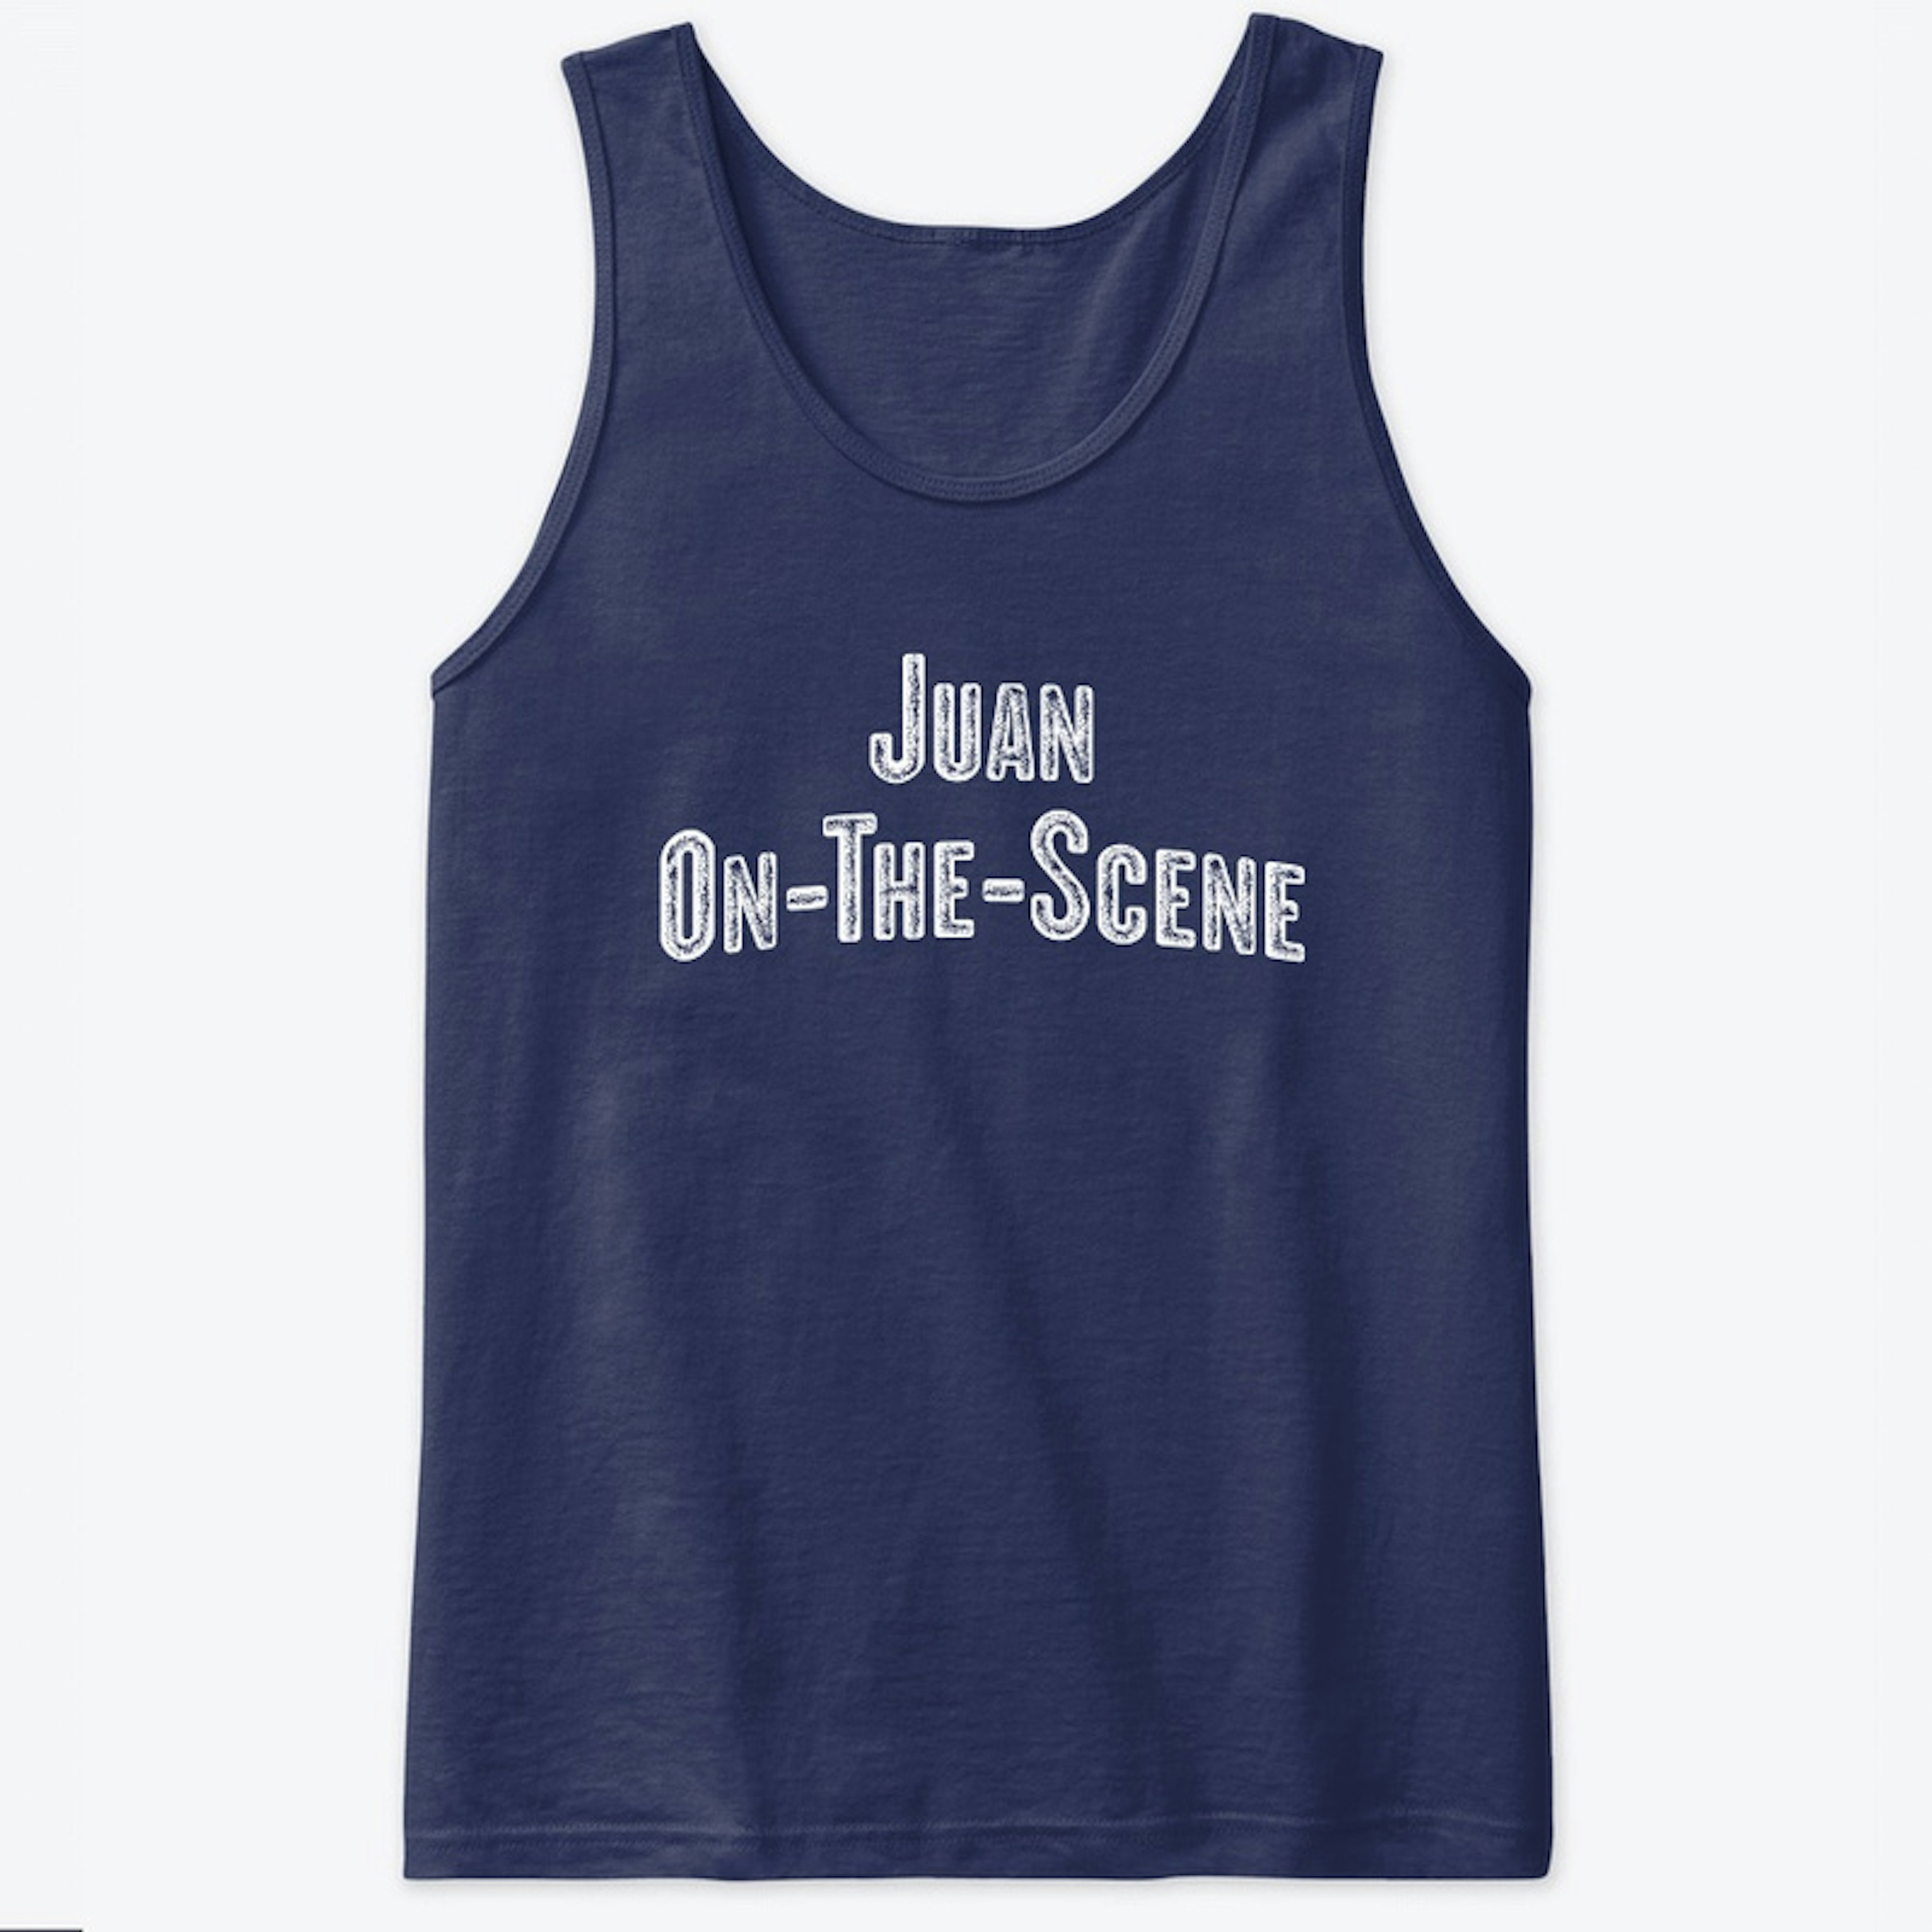 Juan On-The-Scene 2 